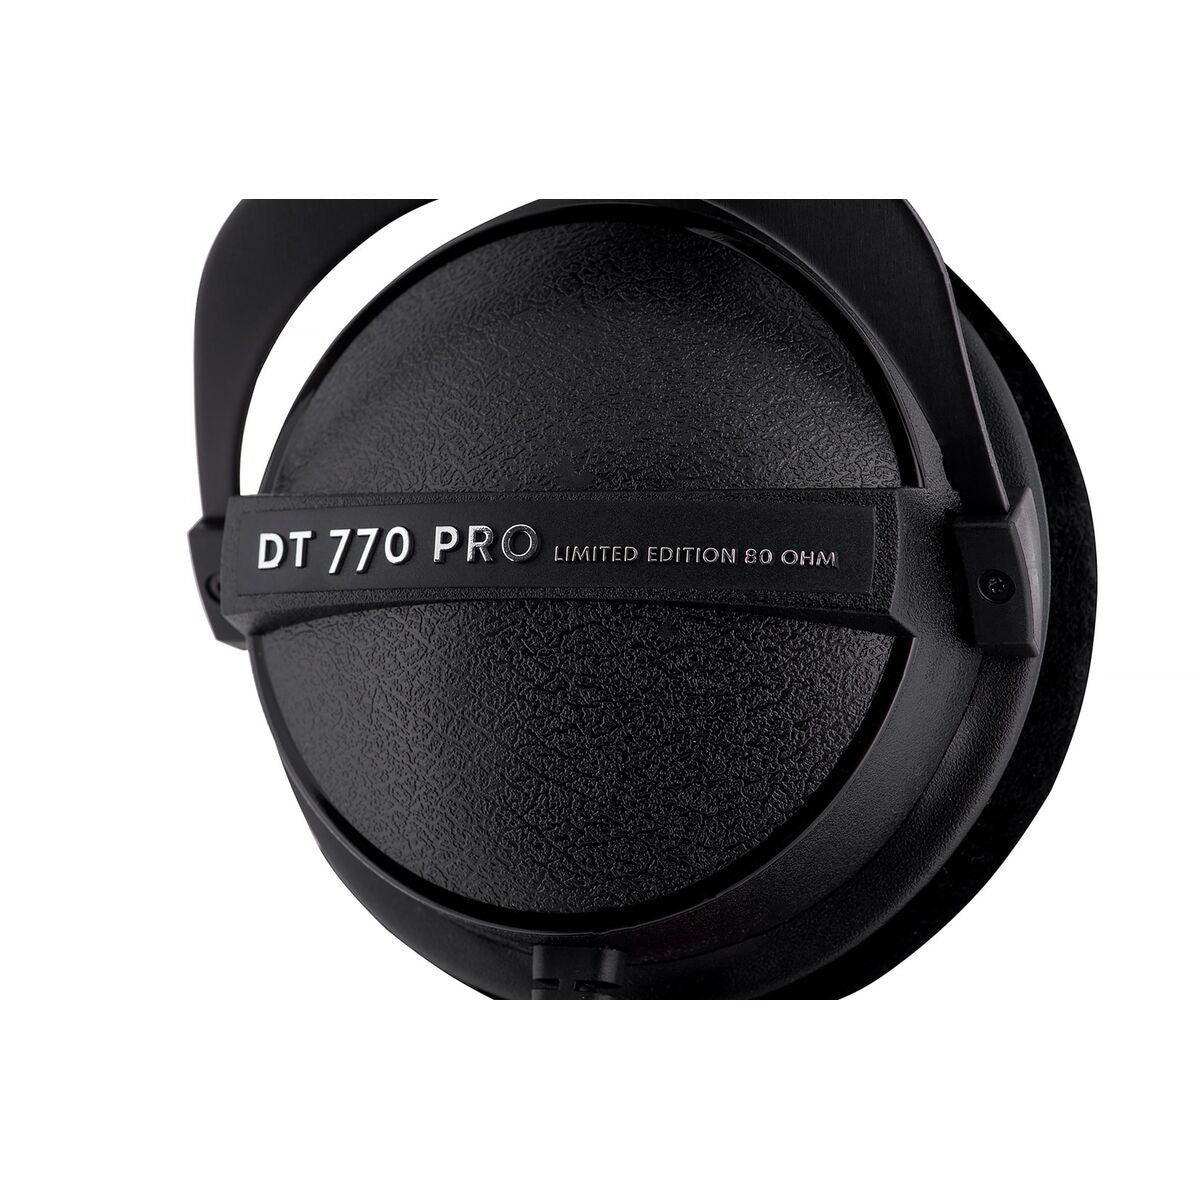 Cuffie Beyerdynamic DT 770 Pro Black Limited Edition - Disponibile in 3-4 giorni lavorativi